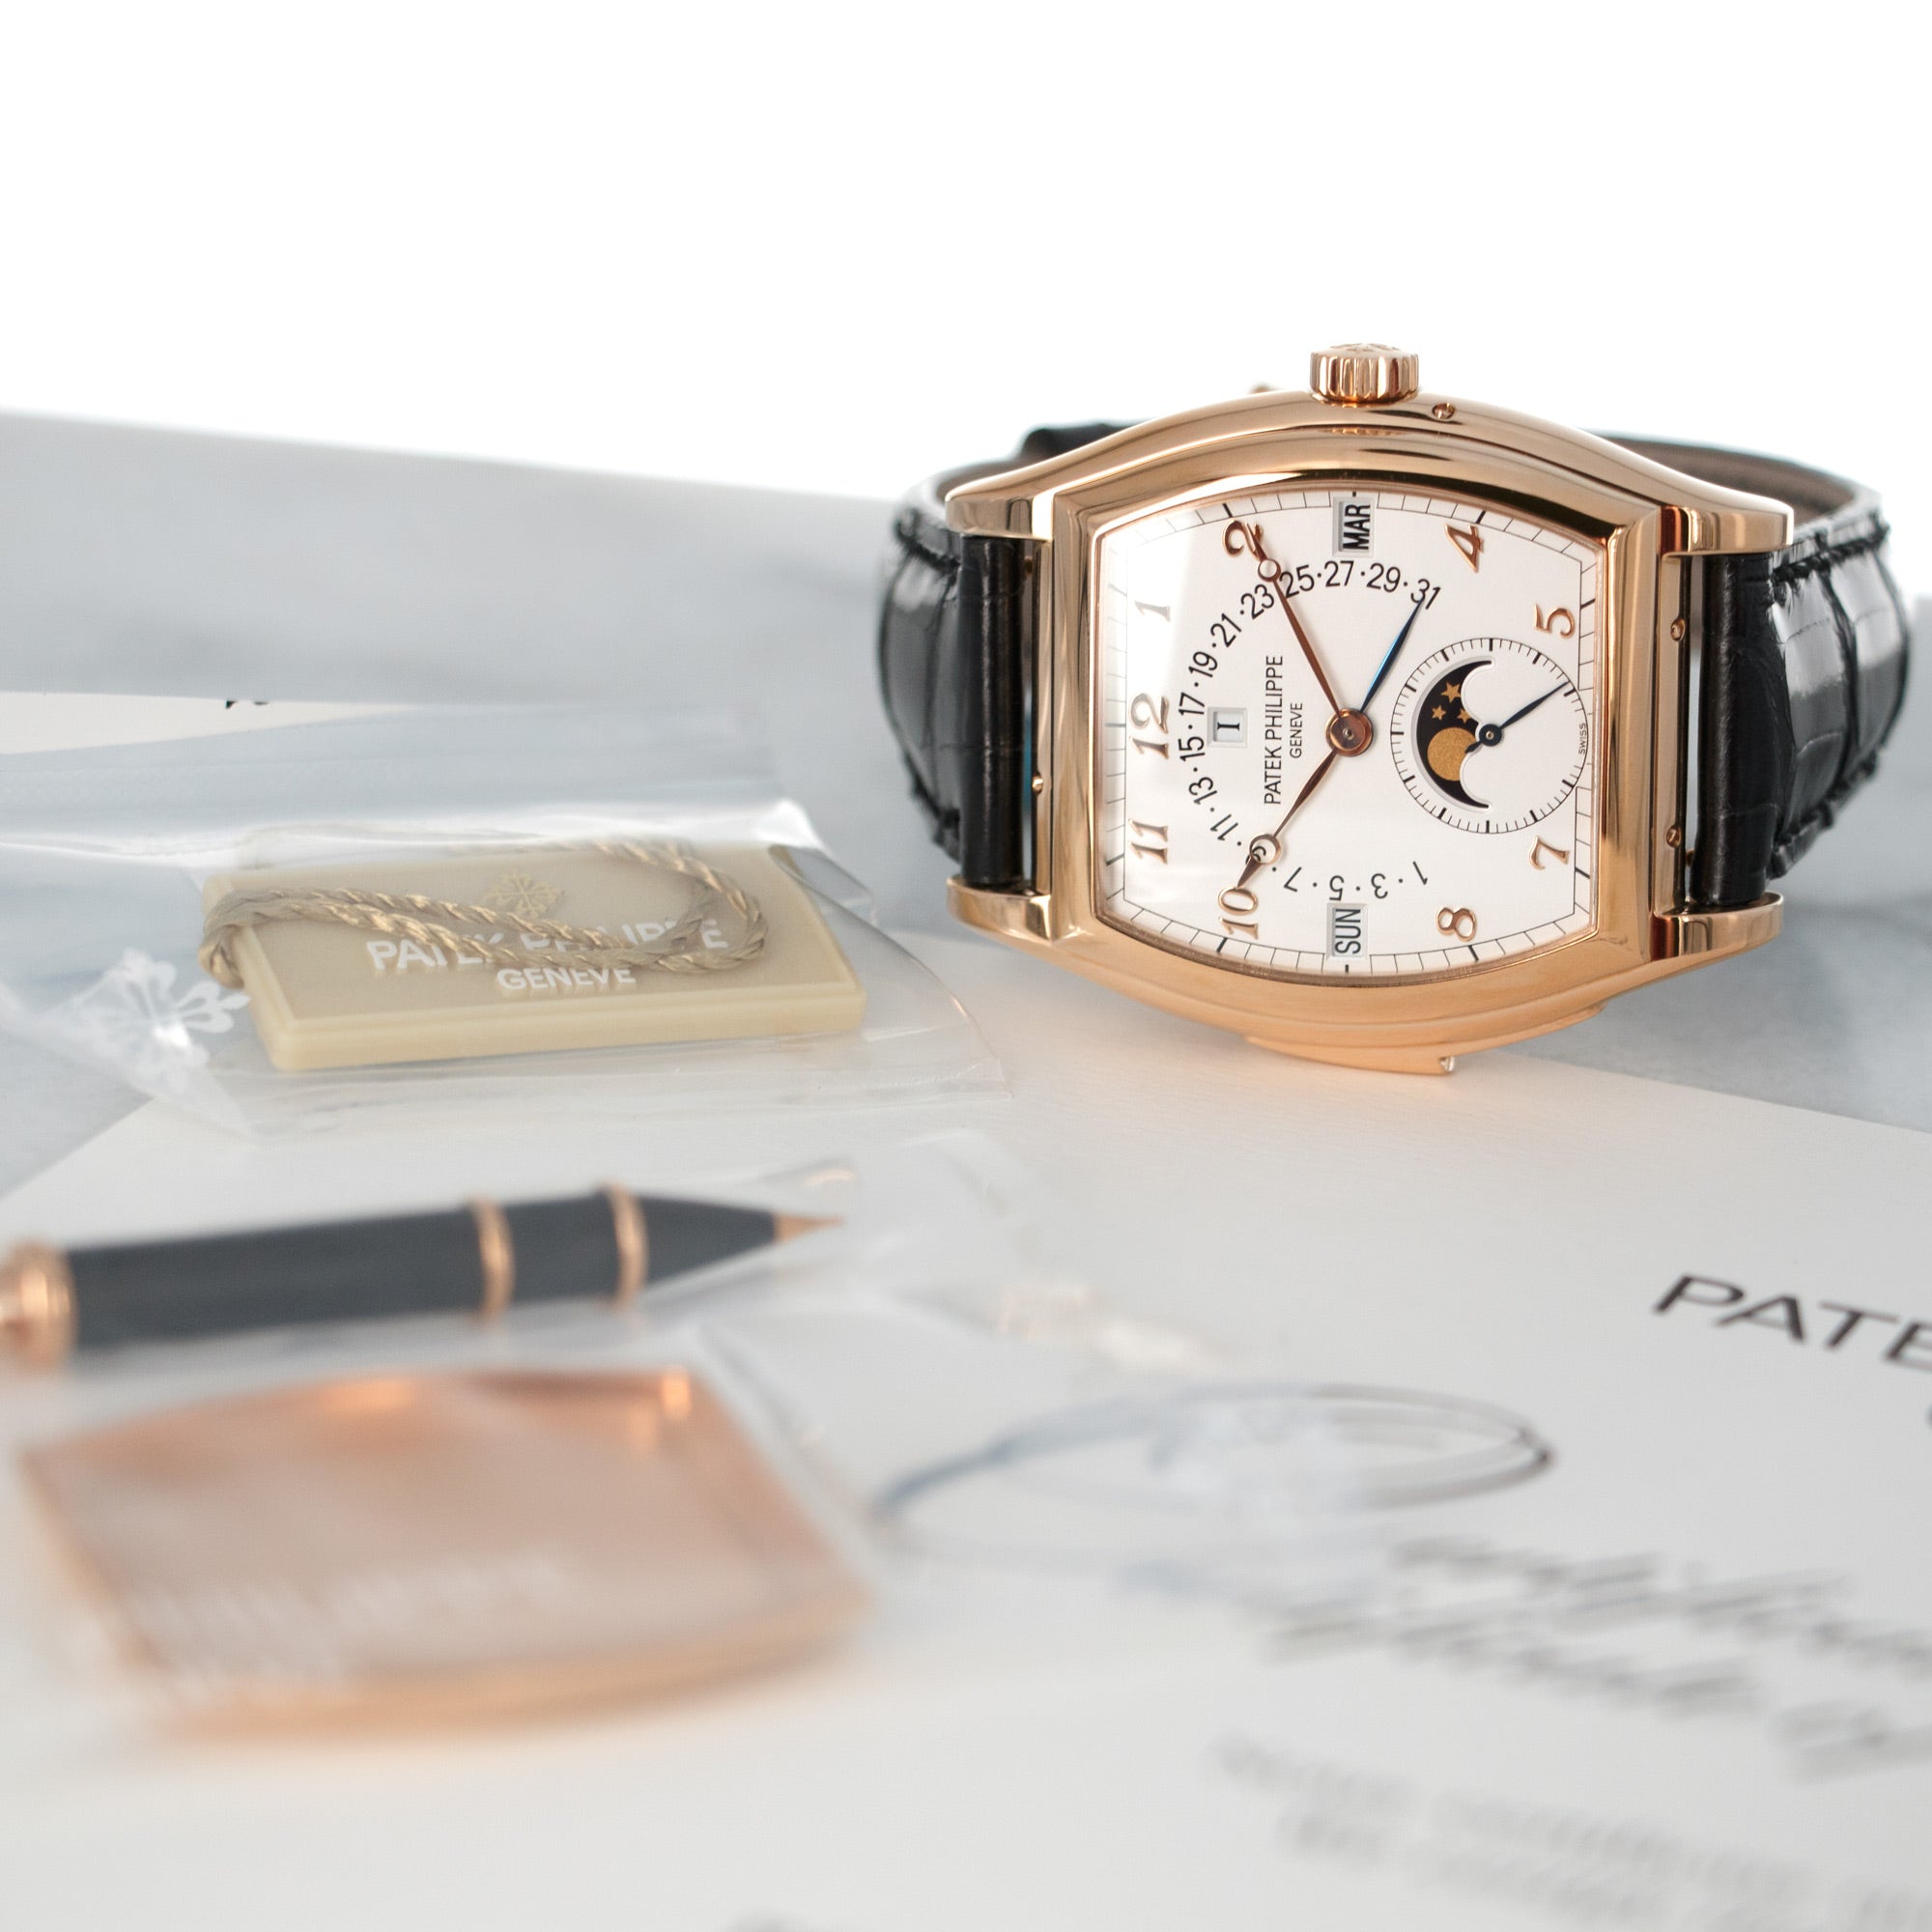 Patek Philippe - Patek Philippe Rose Gold Perpetual Calendar Minute Repeater Watch Ref. 5013 - The Keystone Watches